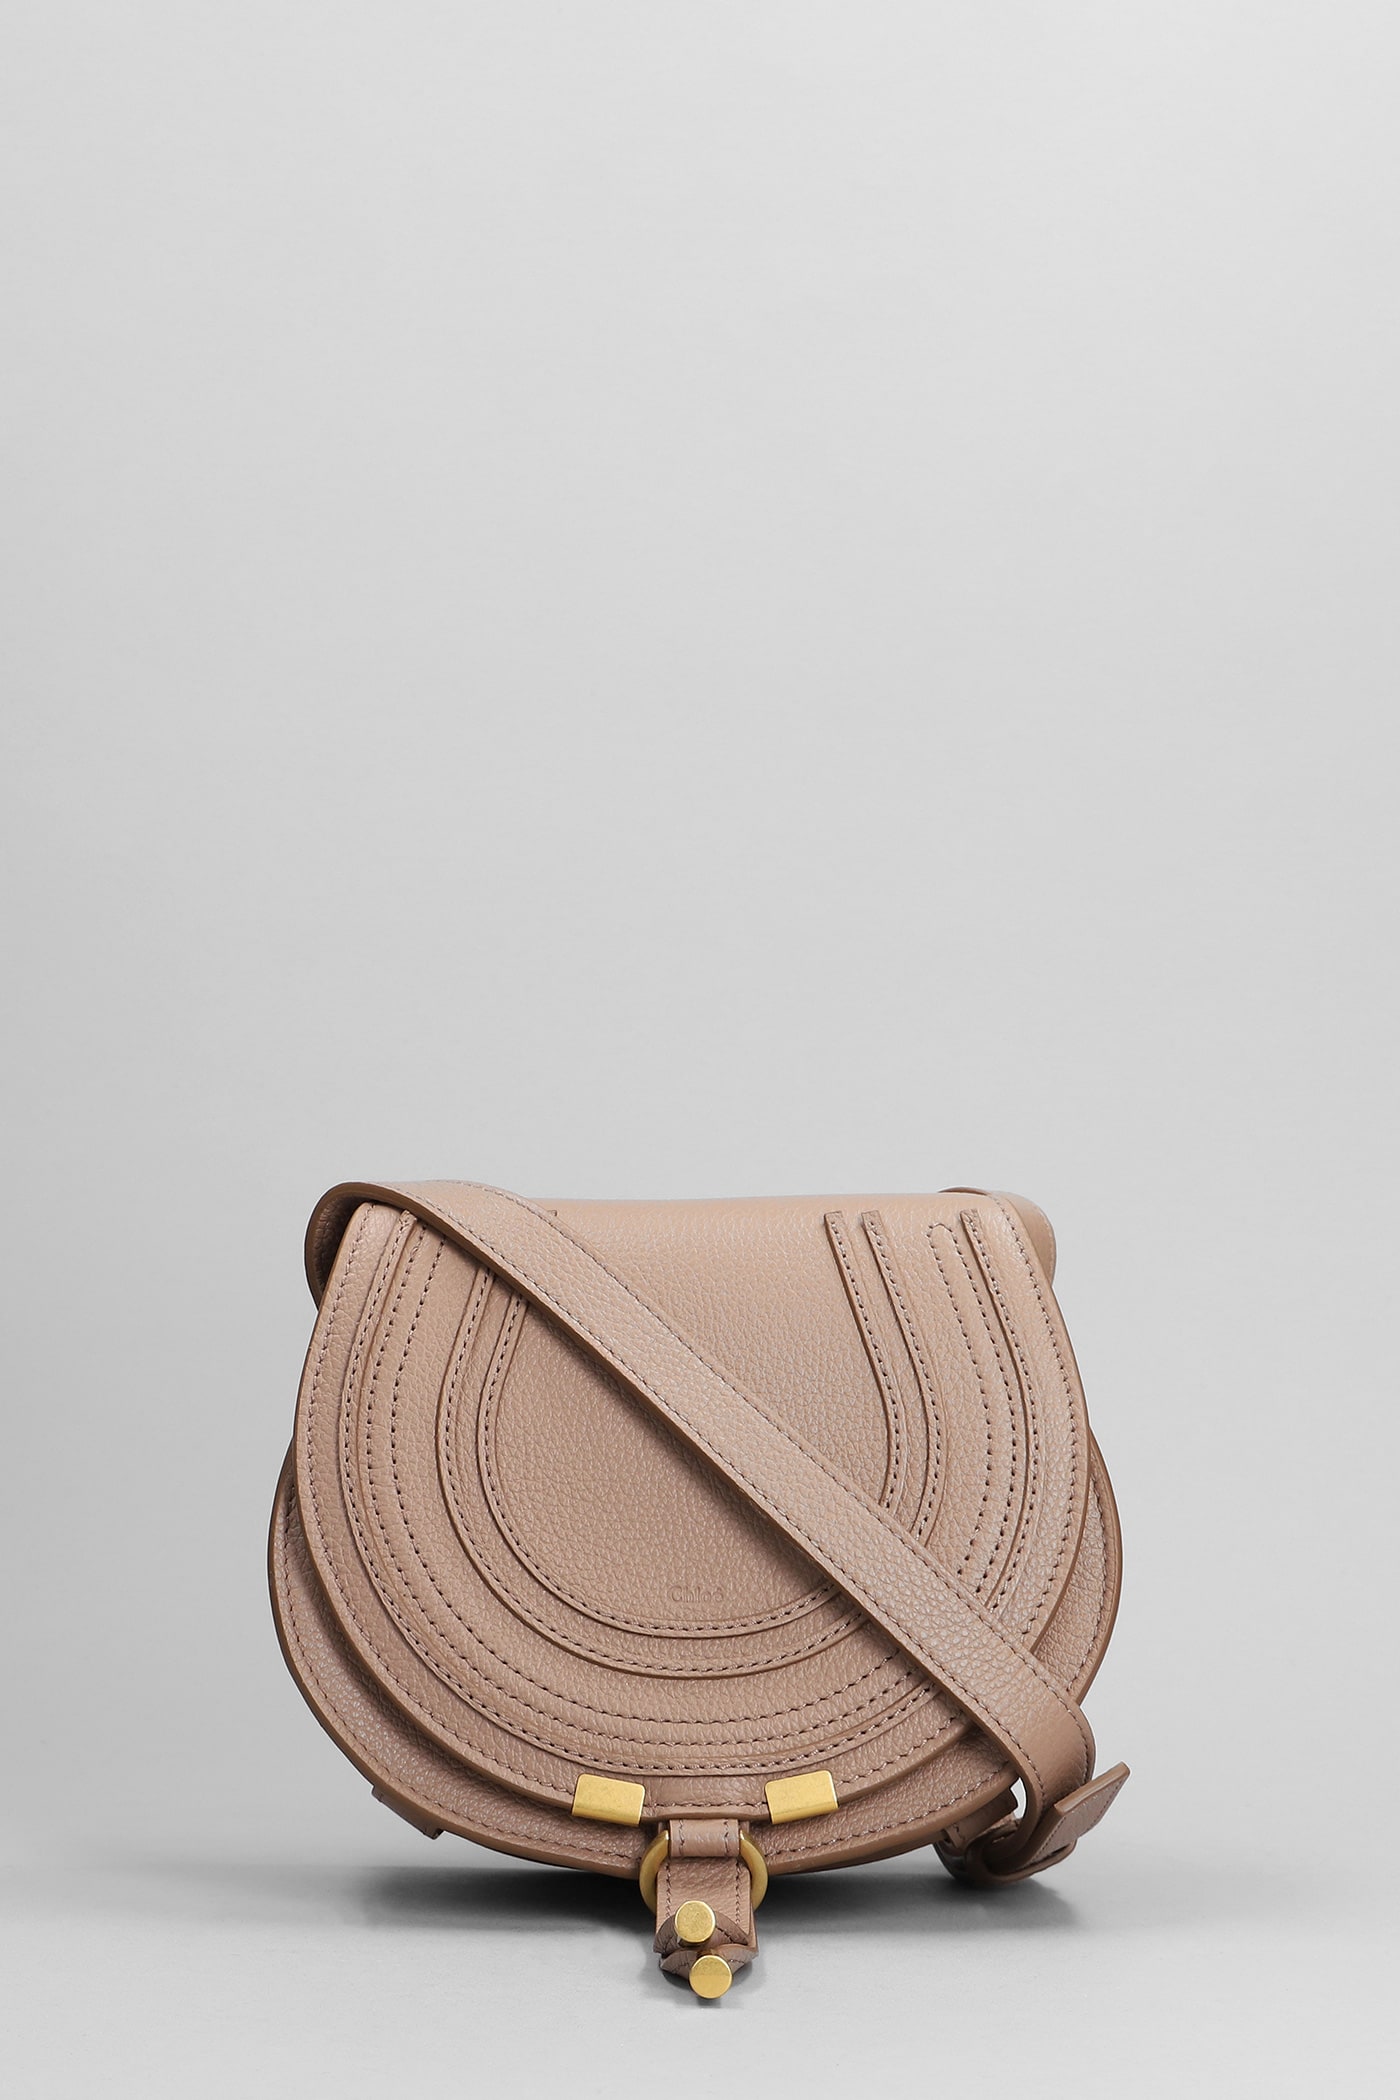 Chloé Mercie Shoulder Bag In Powder Leather